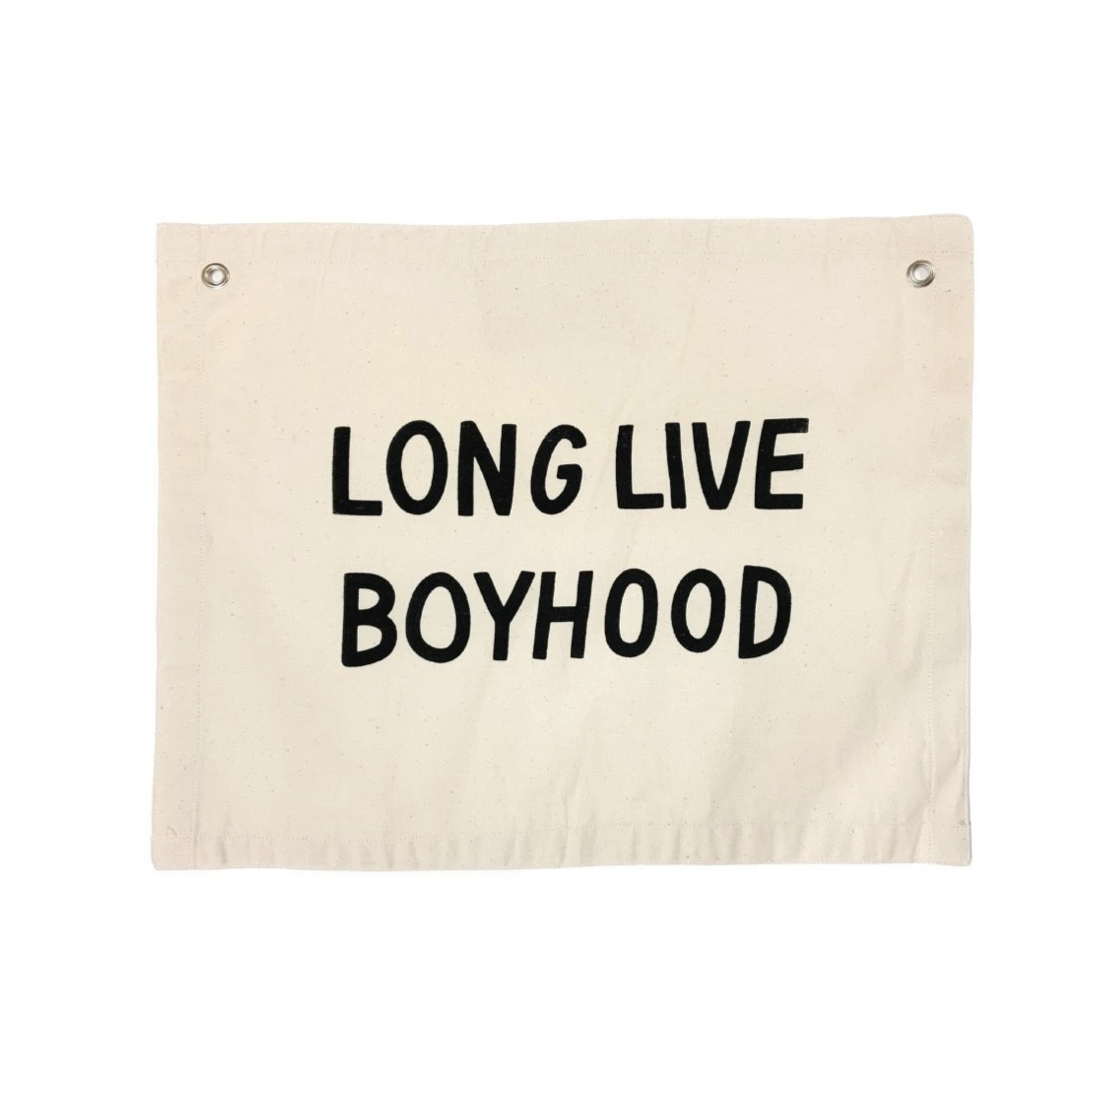 LONG LIVE BOYHOOD BANNER - NATURAL